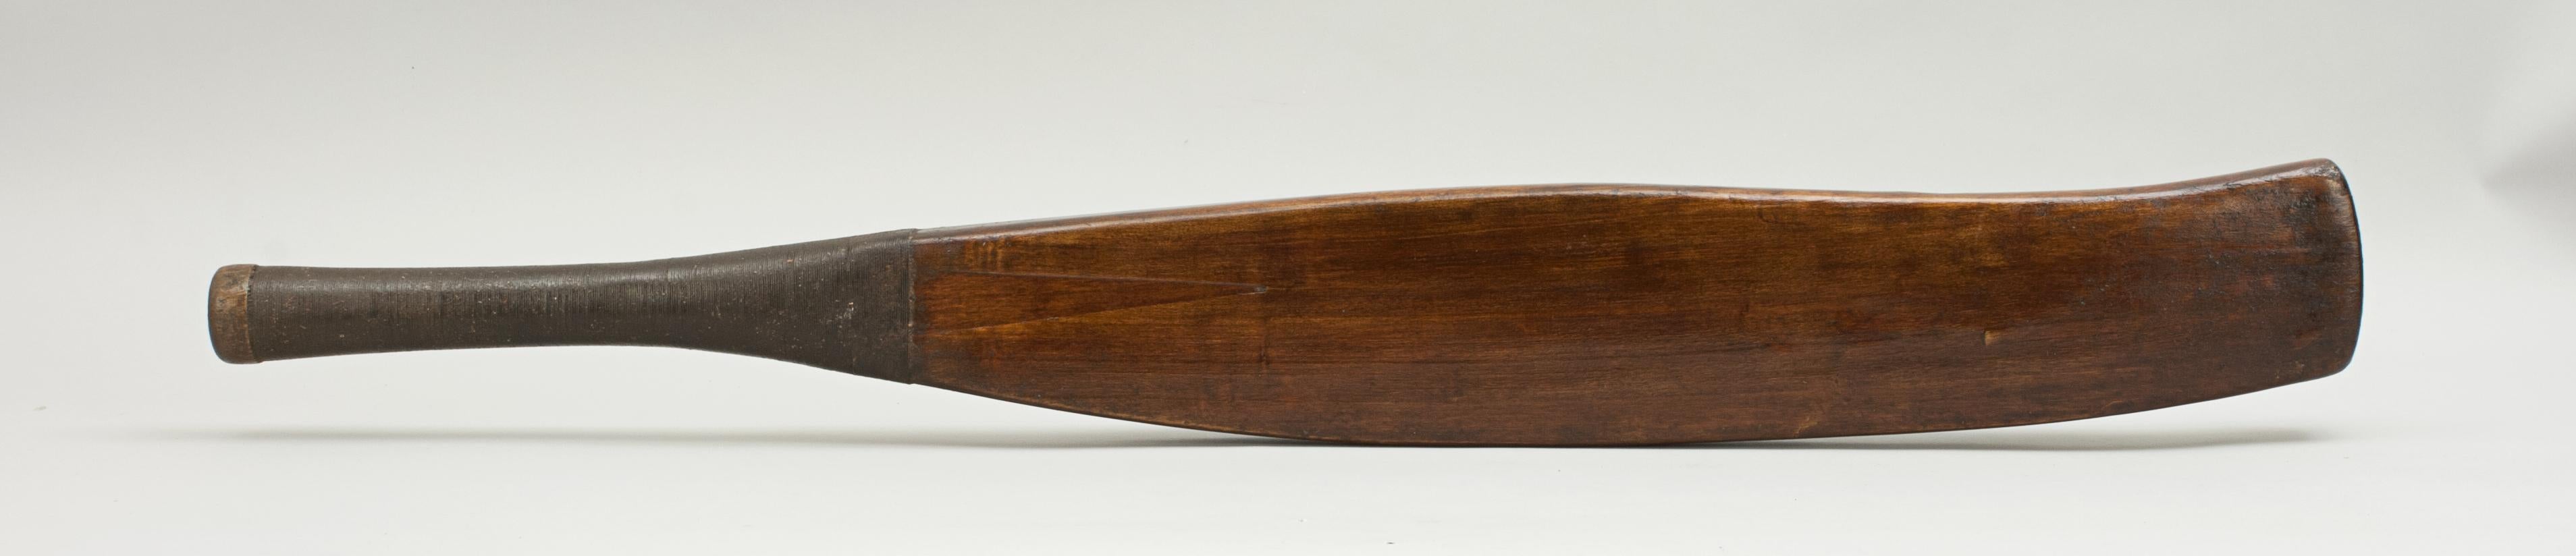 English 18th Century Shaped Cricket Bat, Willow